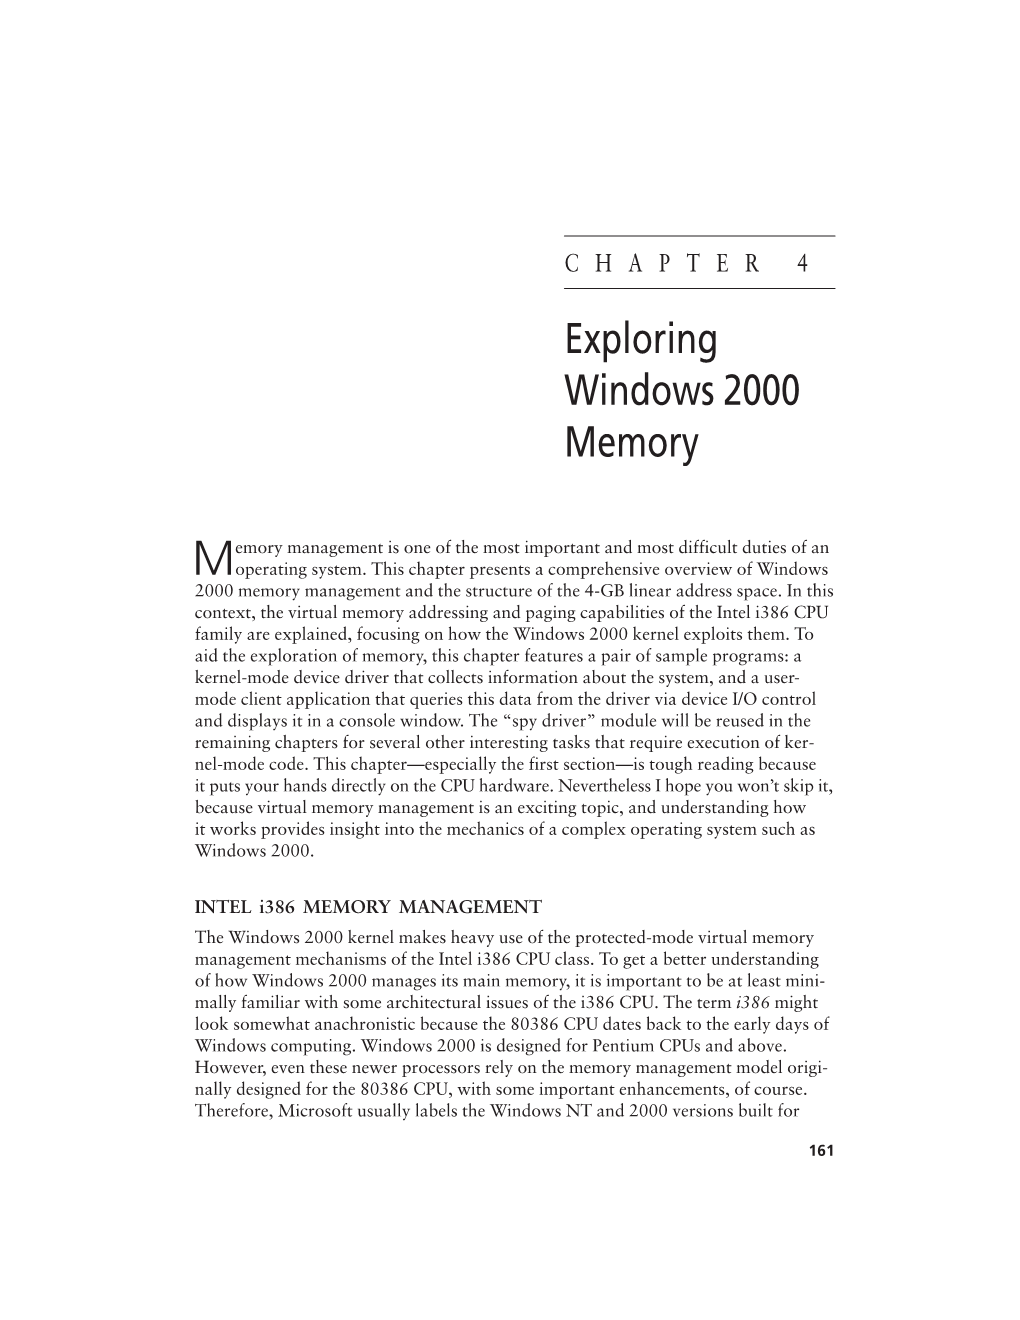 Exploring Windows 2000 Memory